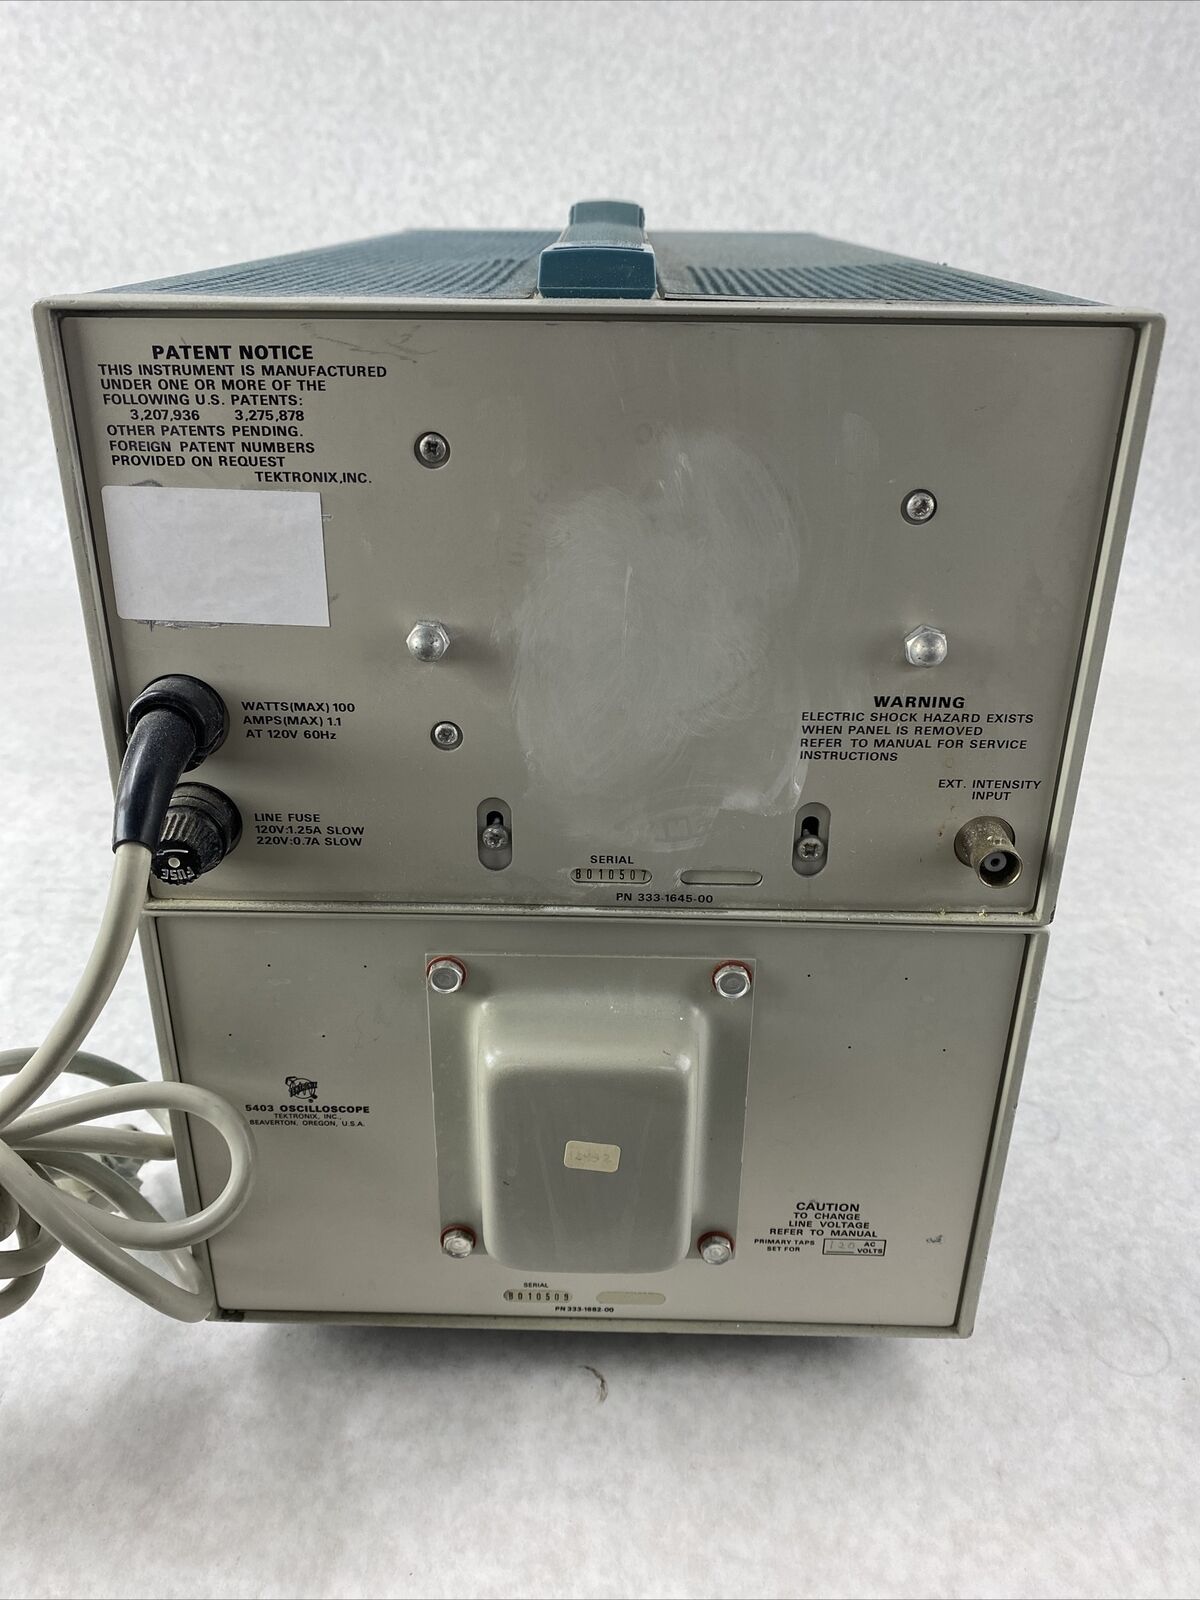 Tektronix 5403 Oscilloscope POWERS ON